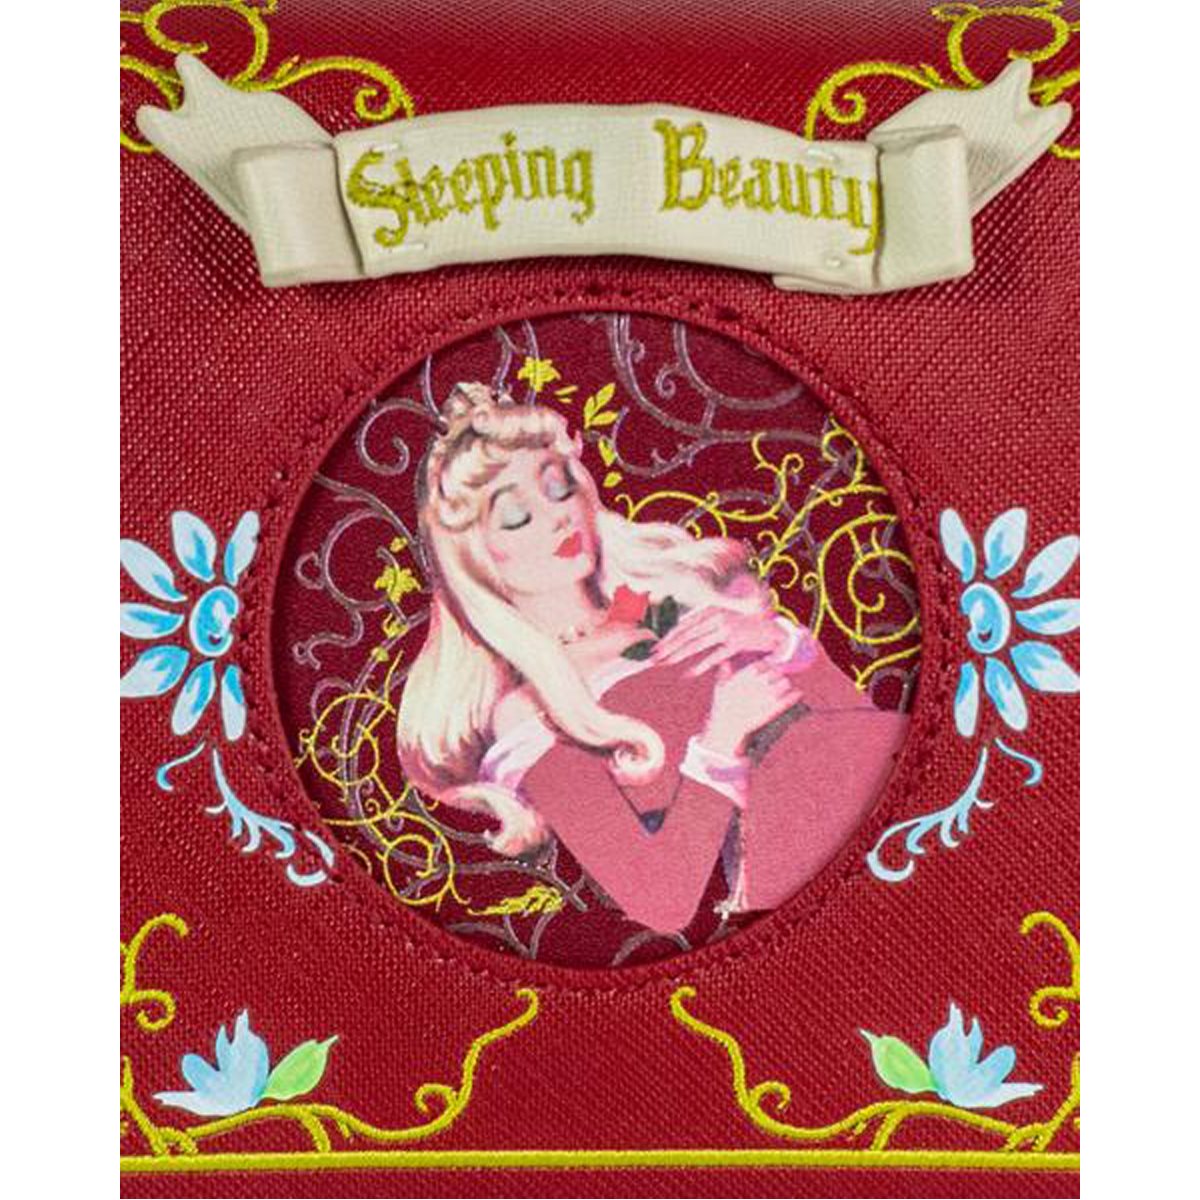 Sleeping Beauty Crossbody Purse by Danielle – Hollyville Boutique